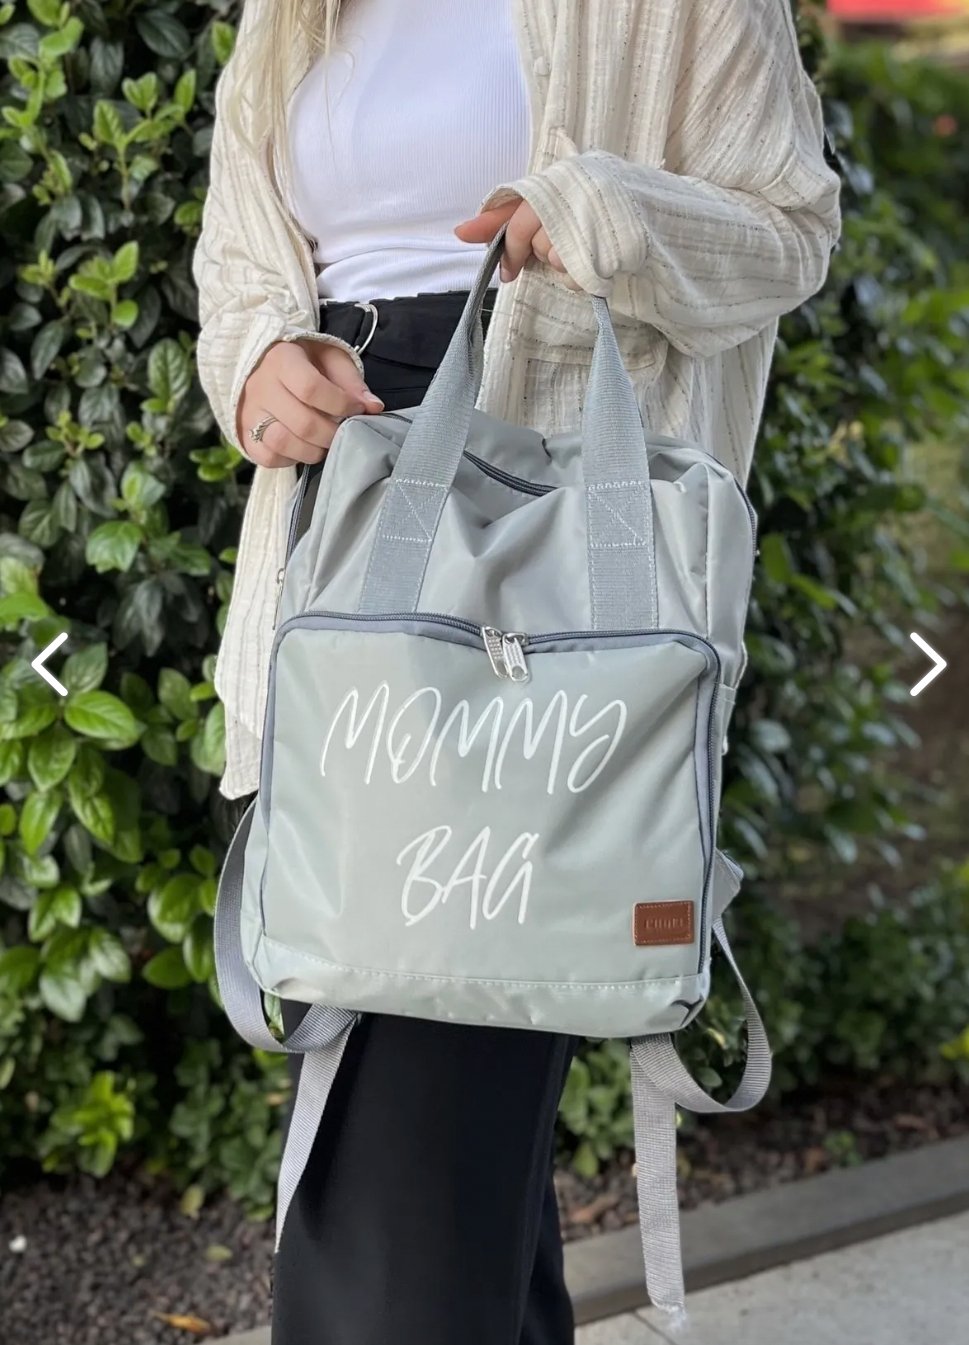 CHQEL Mommy Bag Backpack, Mommy Baby Care, Hospital, Maternity, Mommy Bag for Hospital, Travel Backpack with Thermal Compartment ürününün kopyası ürününün kopyası - CHQEL